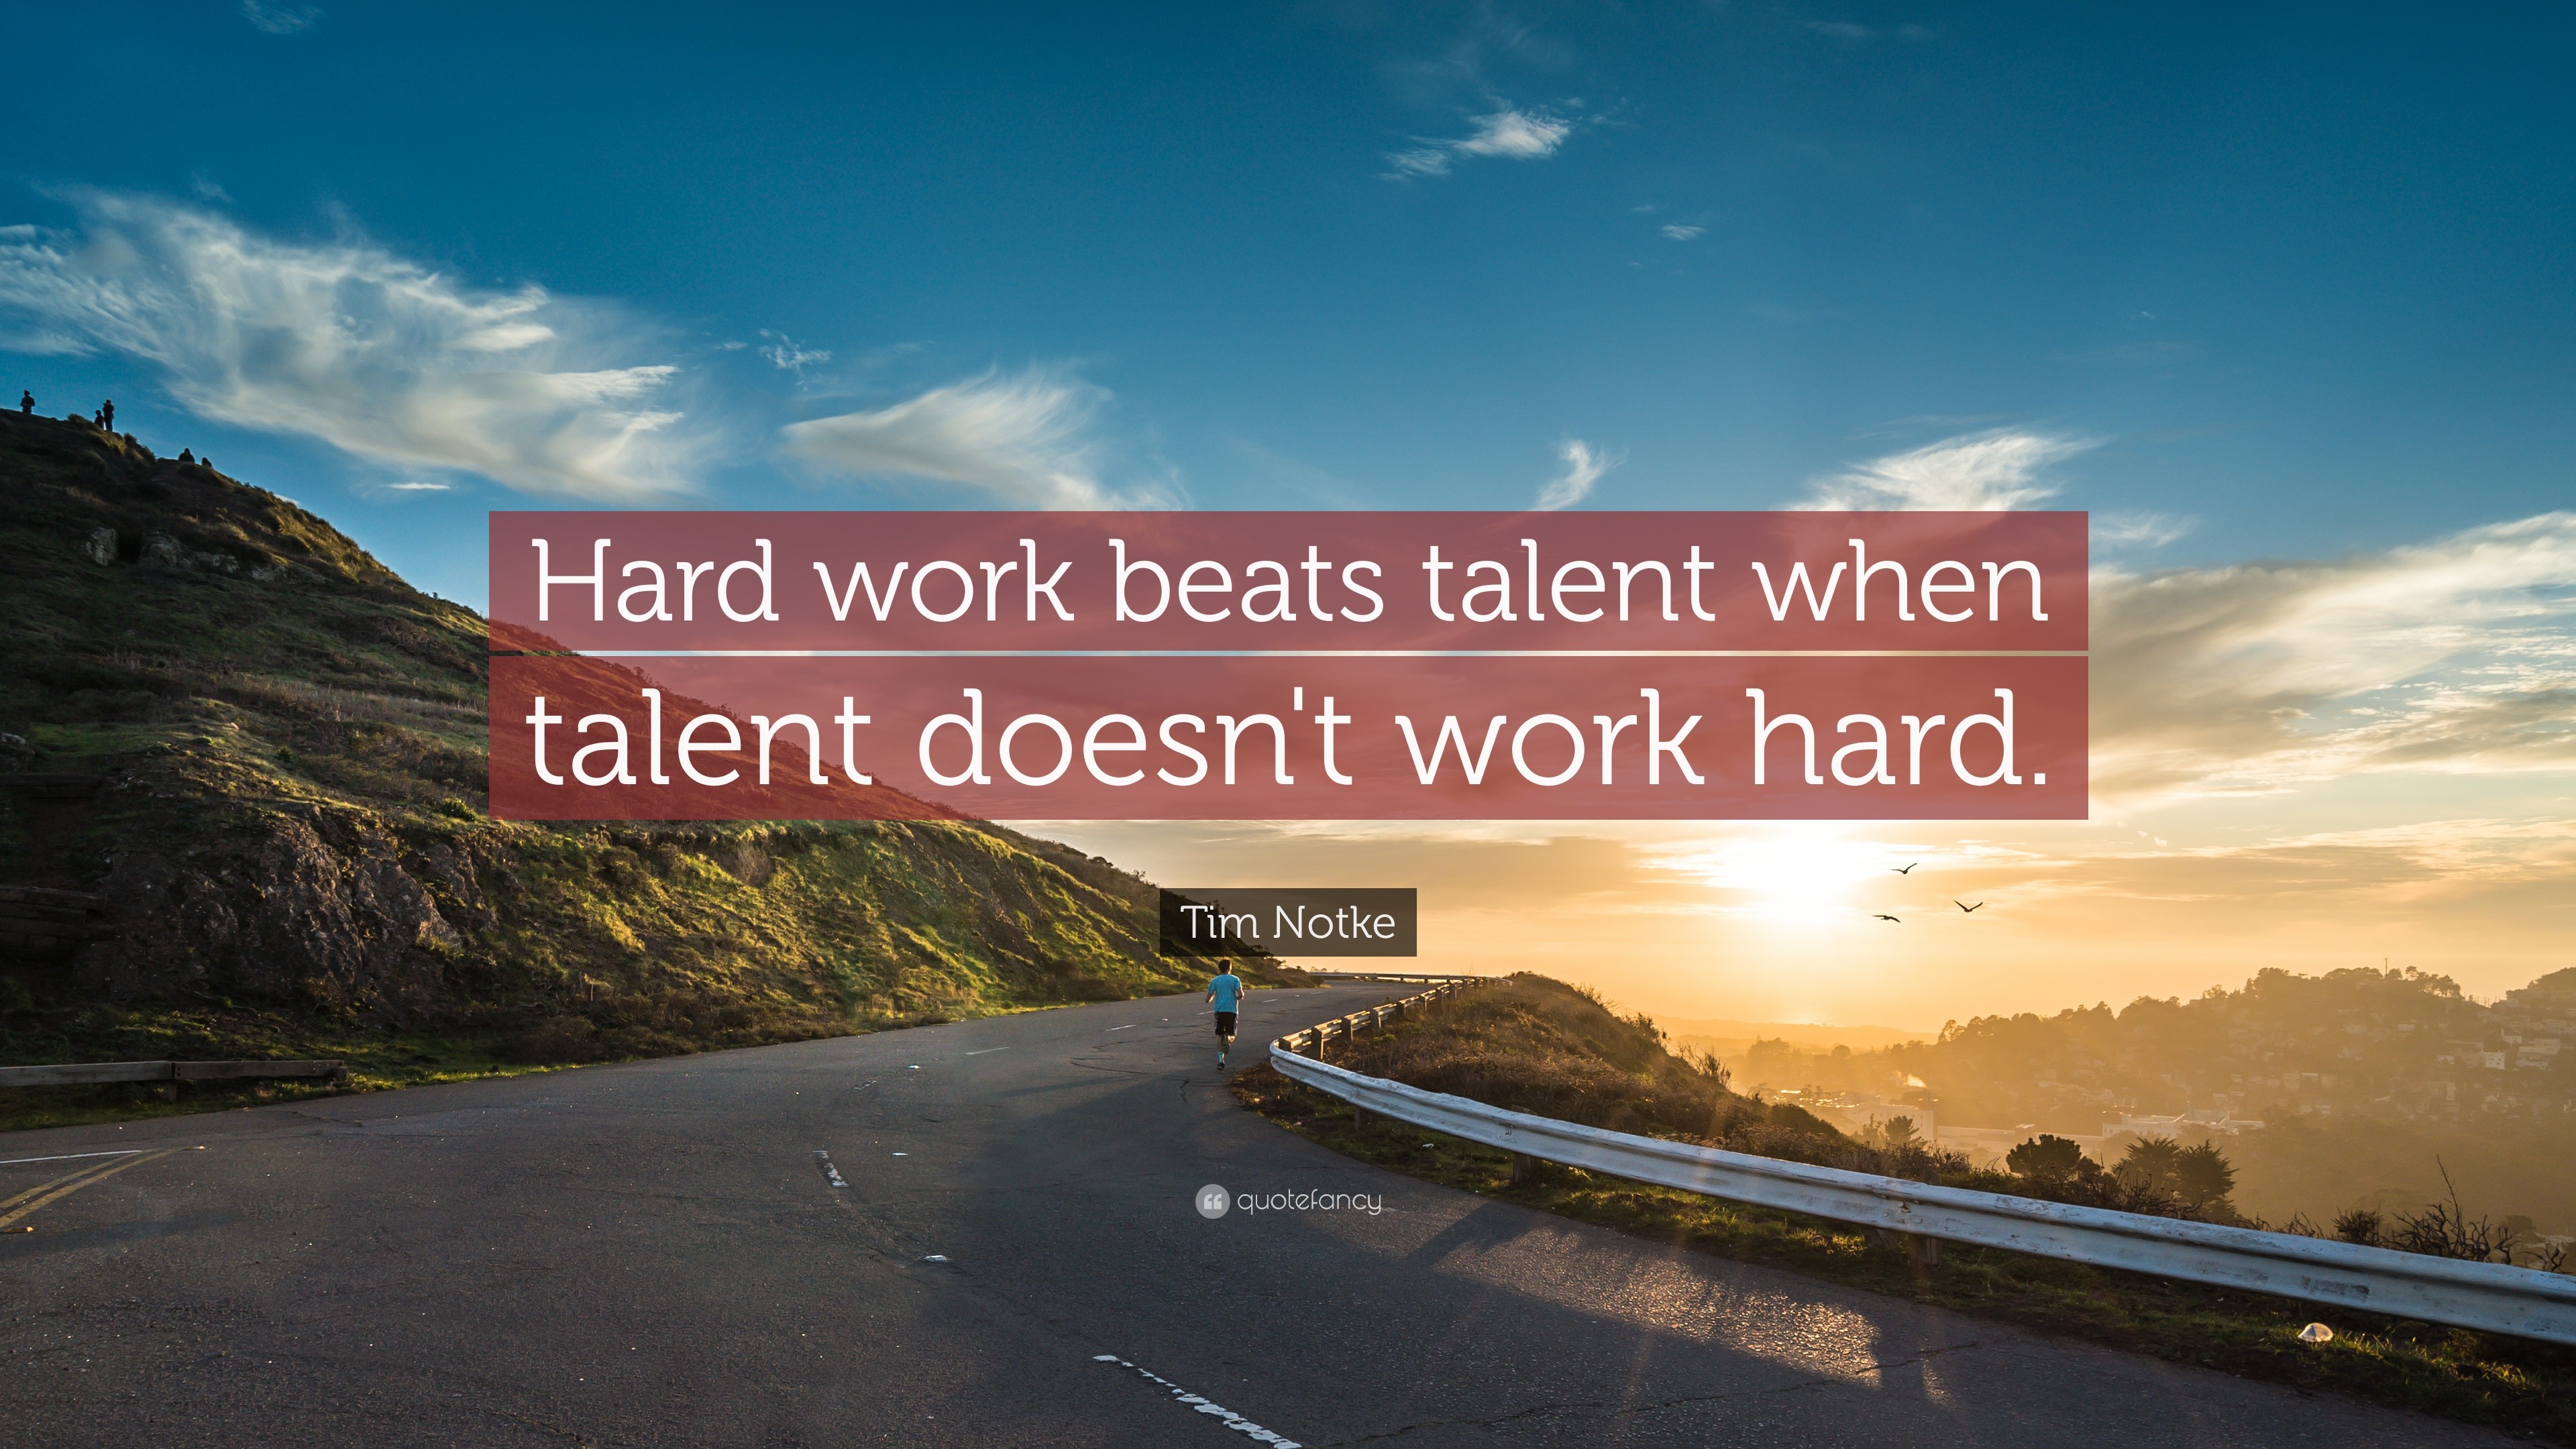 Tim Notke Quote: “Hard Work Beats Talent When Talent Doesn’t Work Hard.”